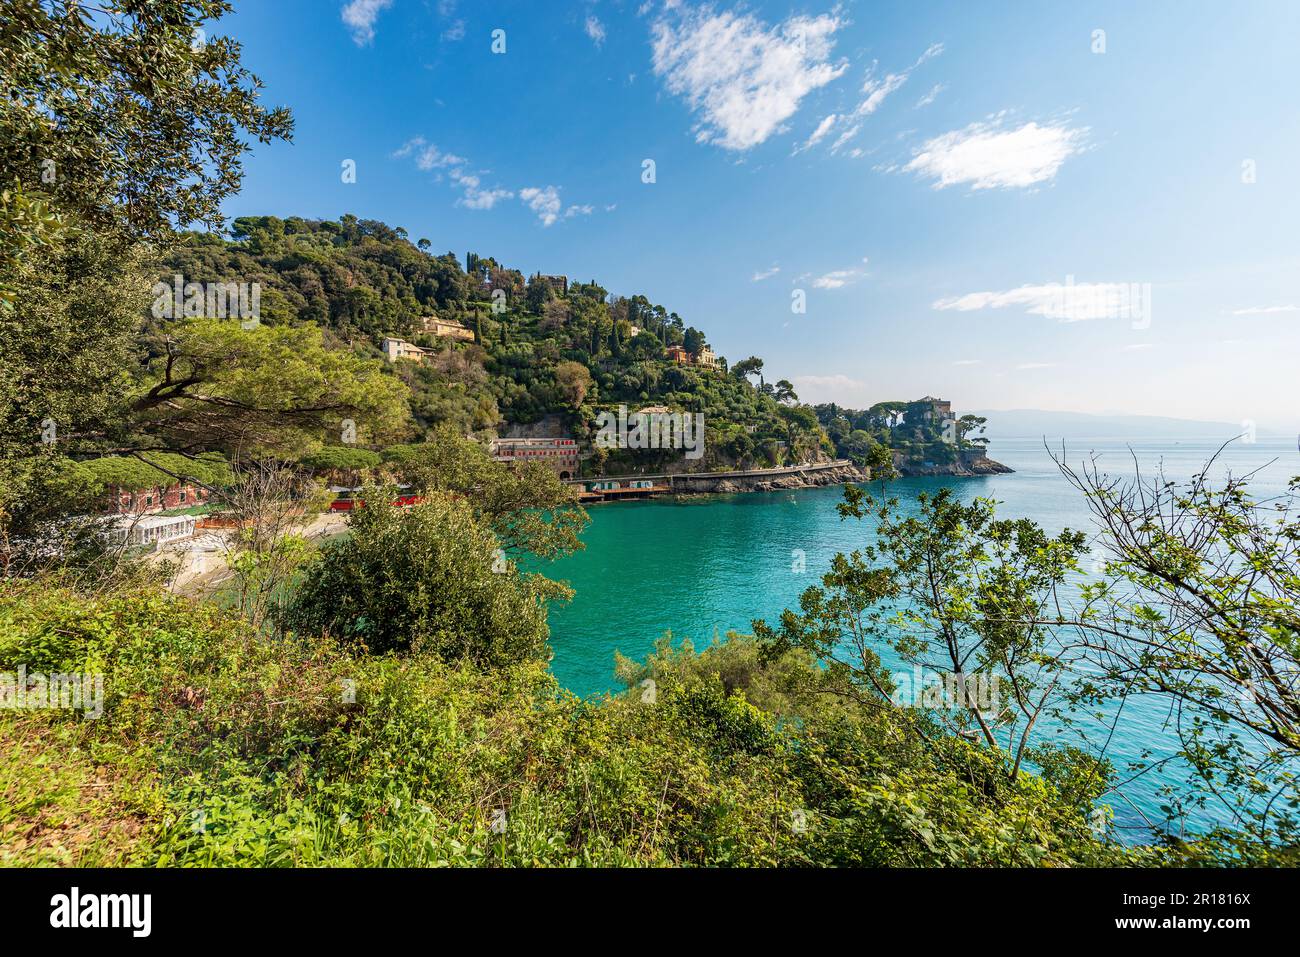 Bay and beach of Paraggi near the Portofino village. Tourist resort in Genoa Province (Genova), Liguria, Italy, Europe. Coast and Mediterranean Sea. Stock Photo